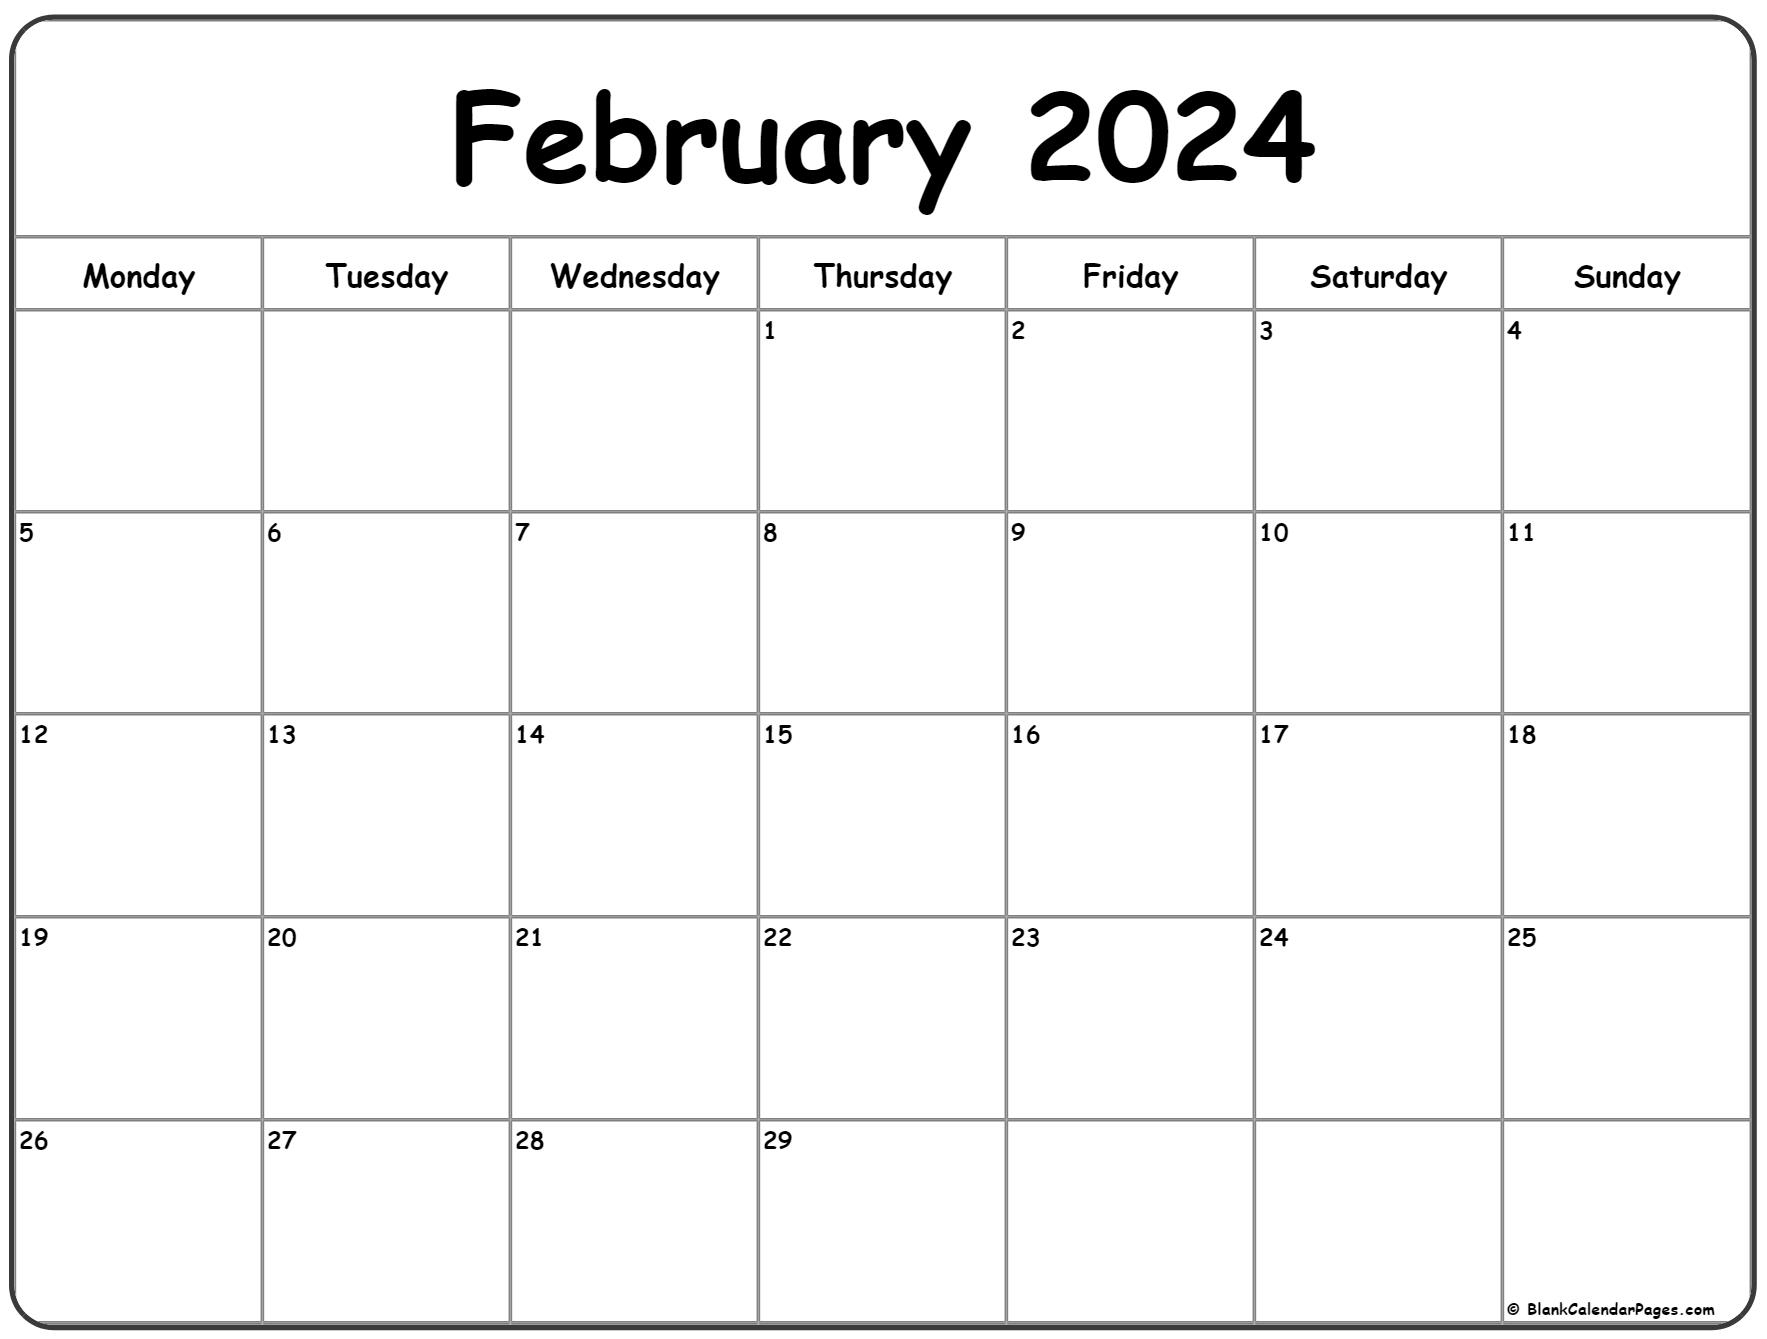 February 2024 Monday Calendar | Monday To Sunday for Free Calendar Printable February 2024